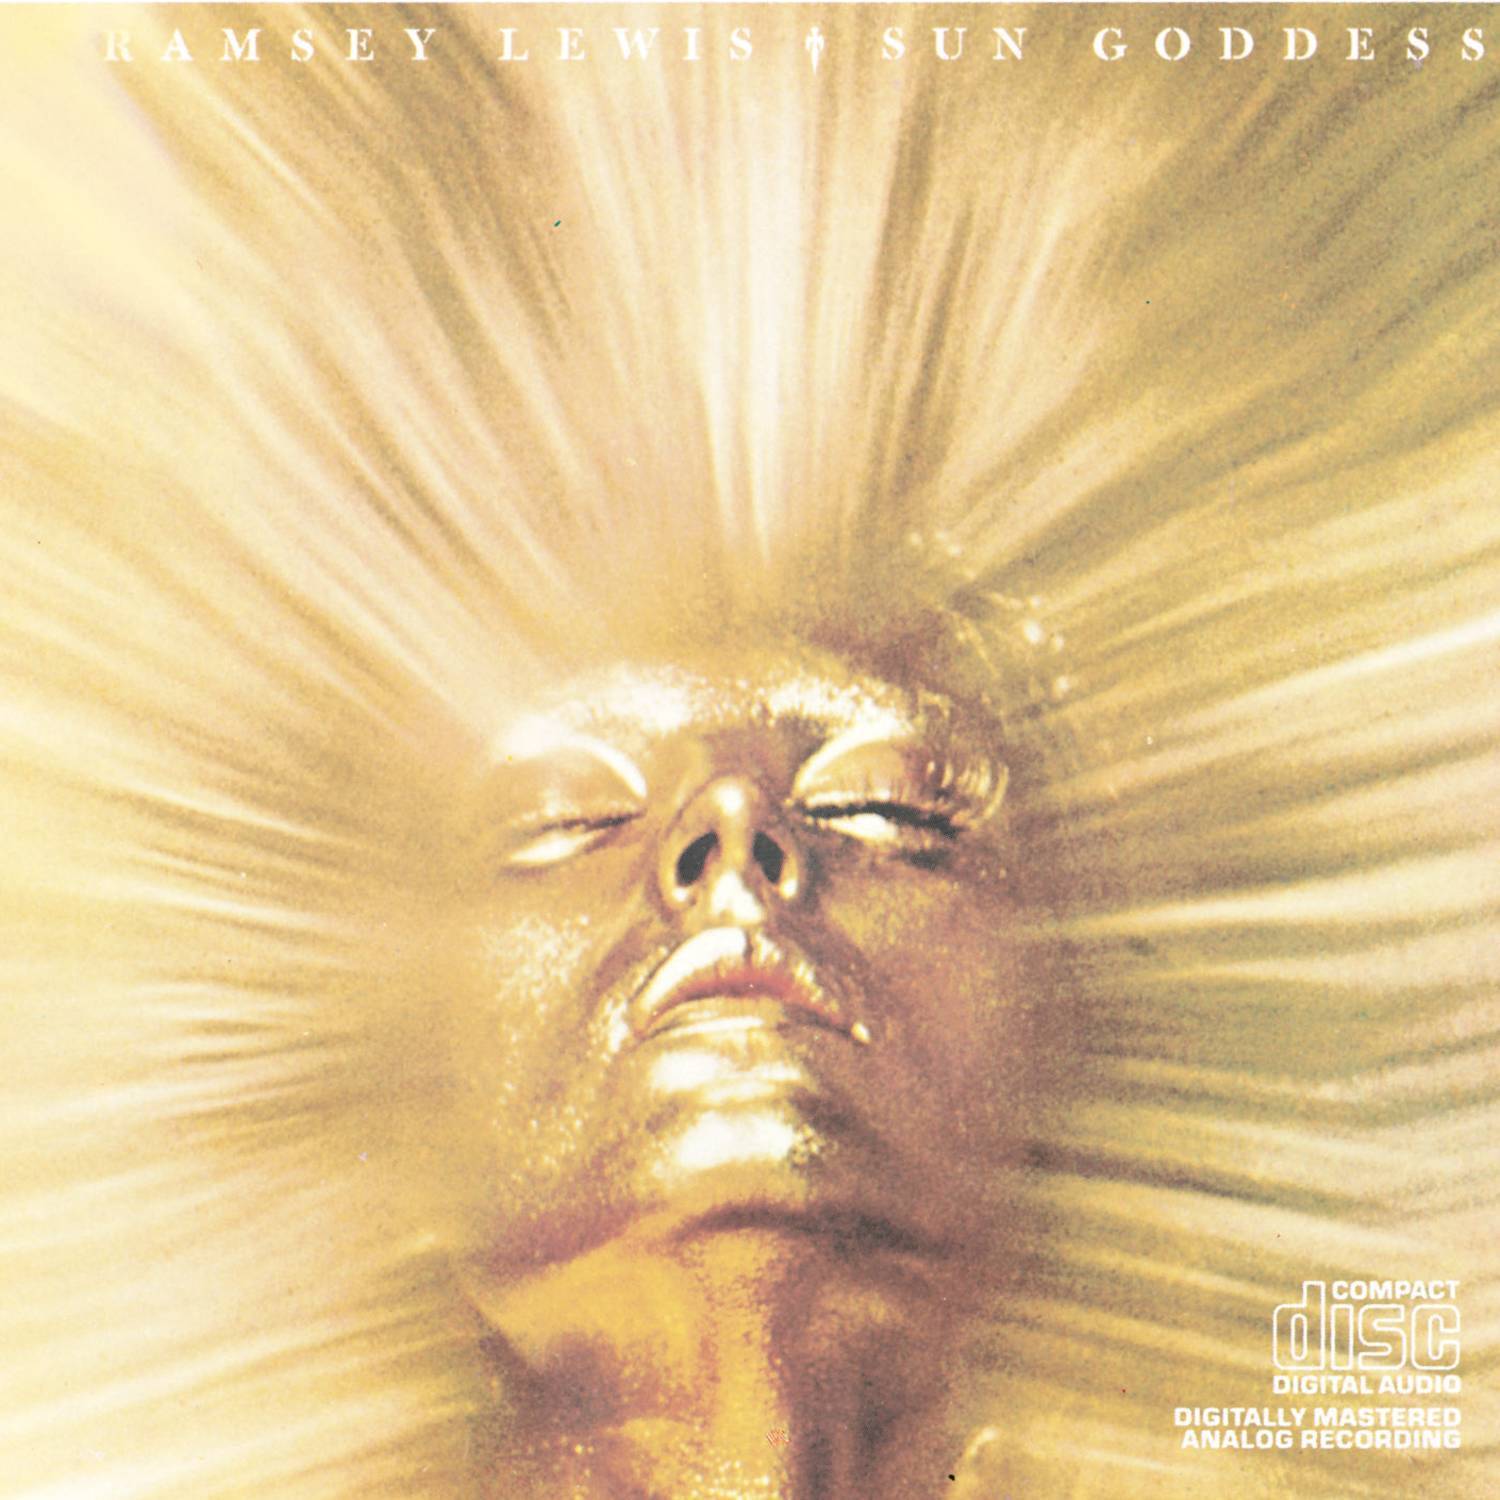 Ramsey Lewis – Sun Goddess (1974/2017) [AcousticSounds FLAC 24bit/192kHz]